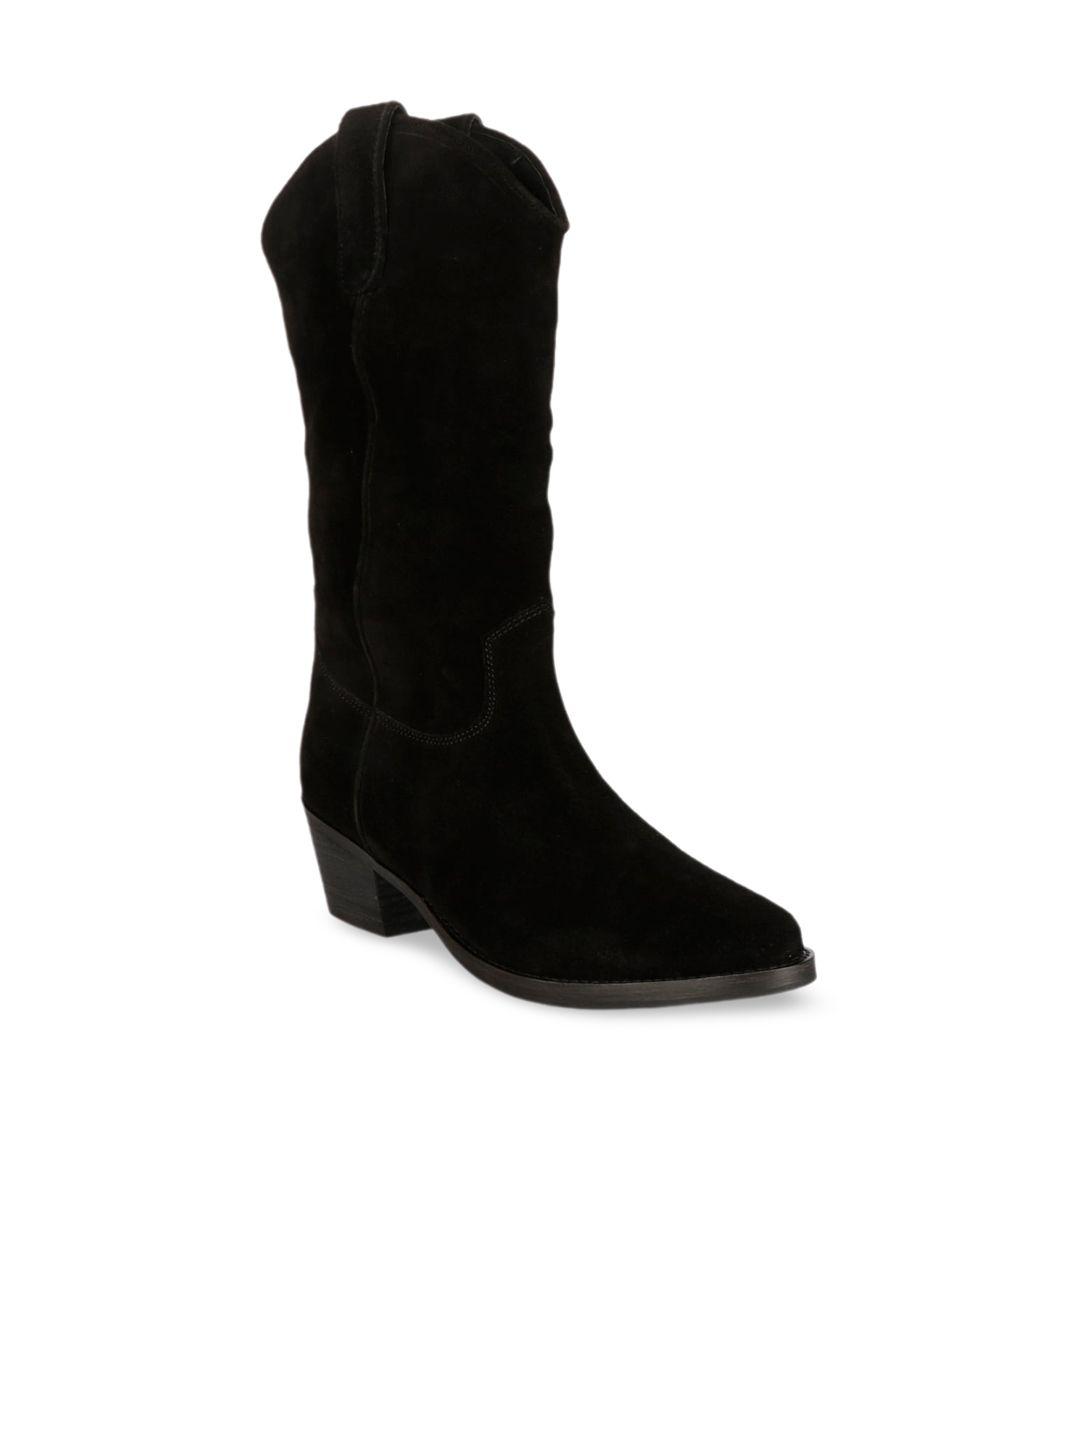 saint-g-women-high-top-genuine-leather-block-heel-regular-boots